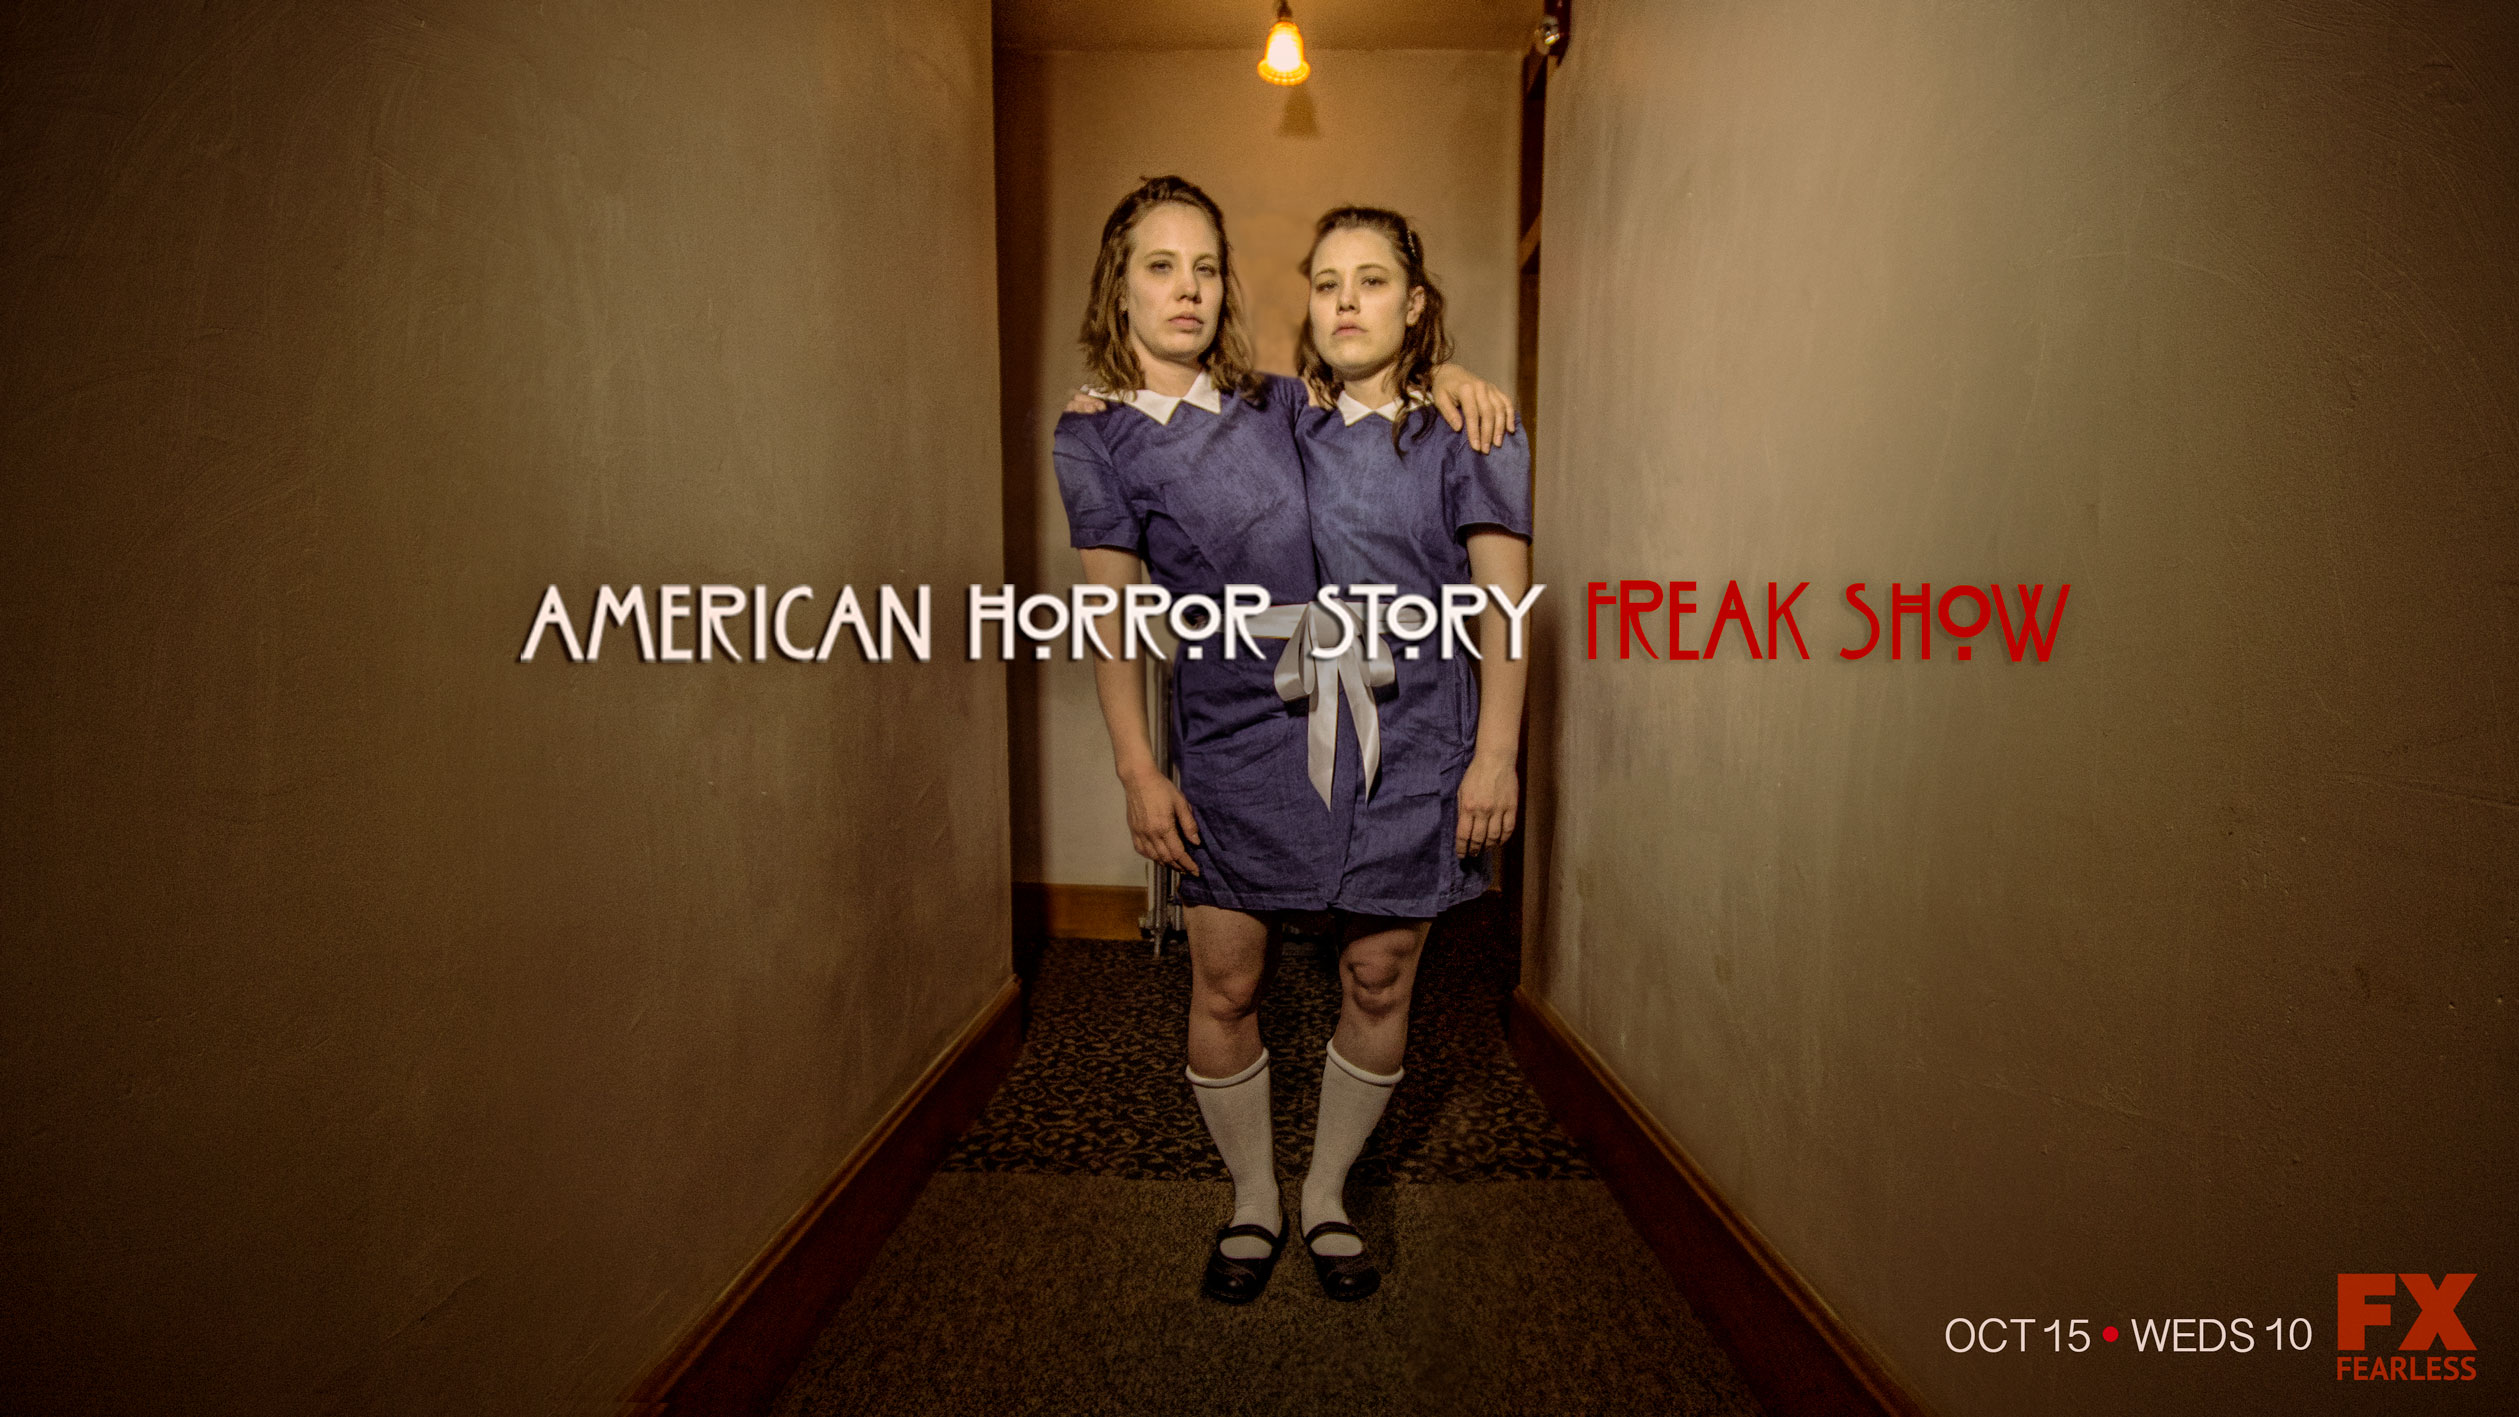 Freaky nieuwe poster 'American Horror Story: Freak Show' - Serietotaal.nl2519 x 1417